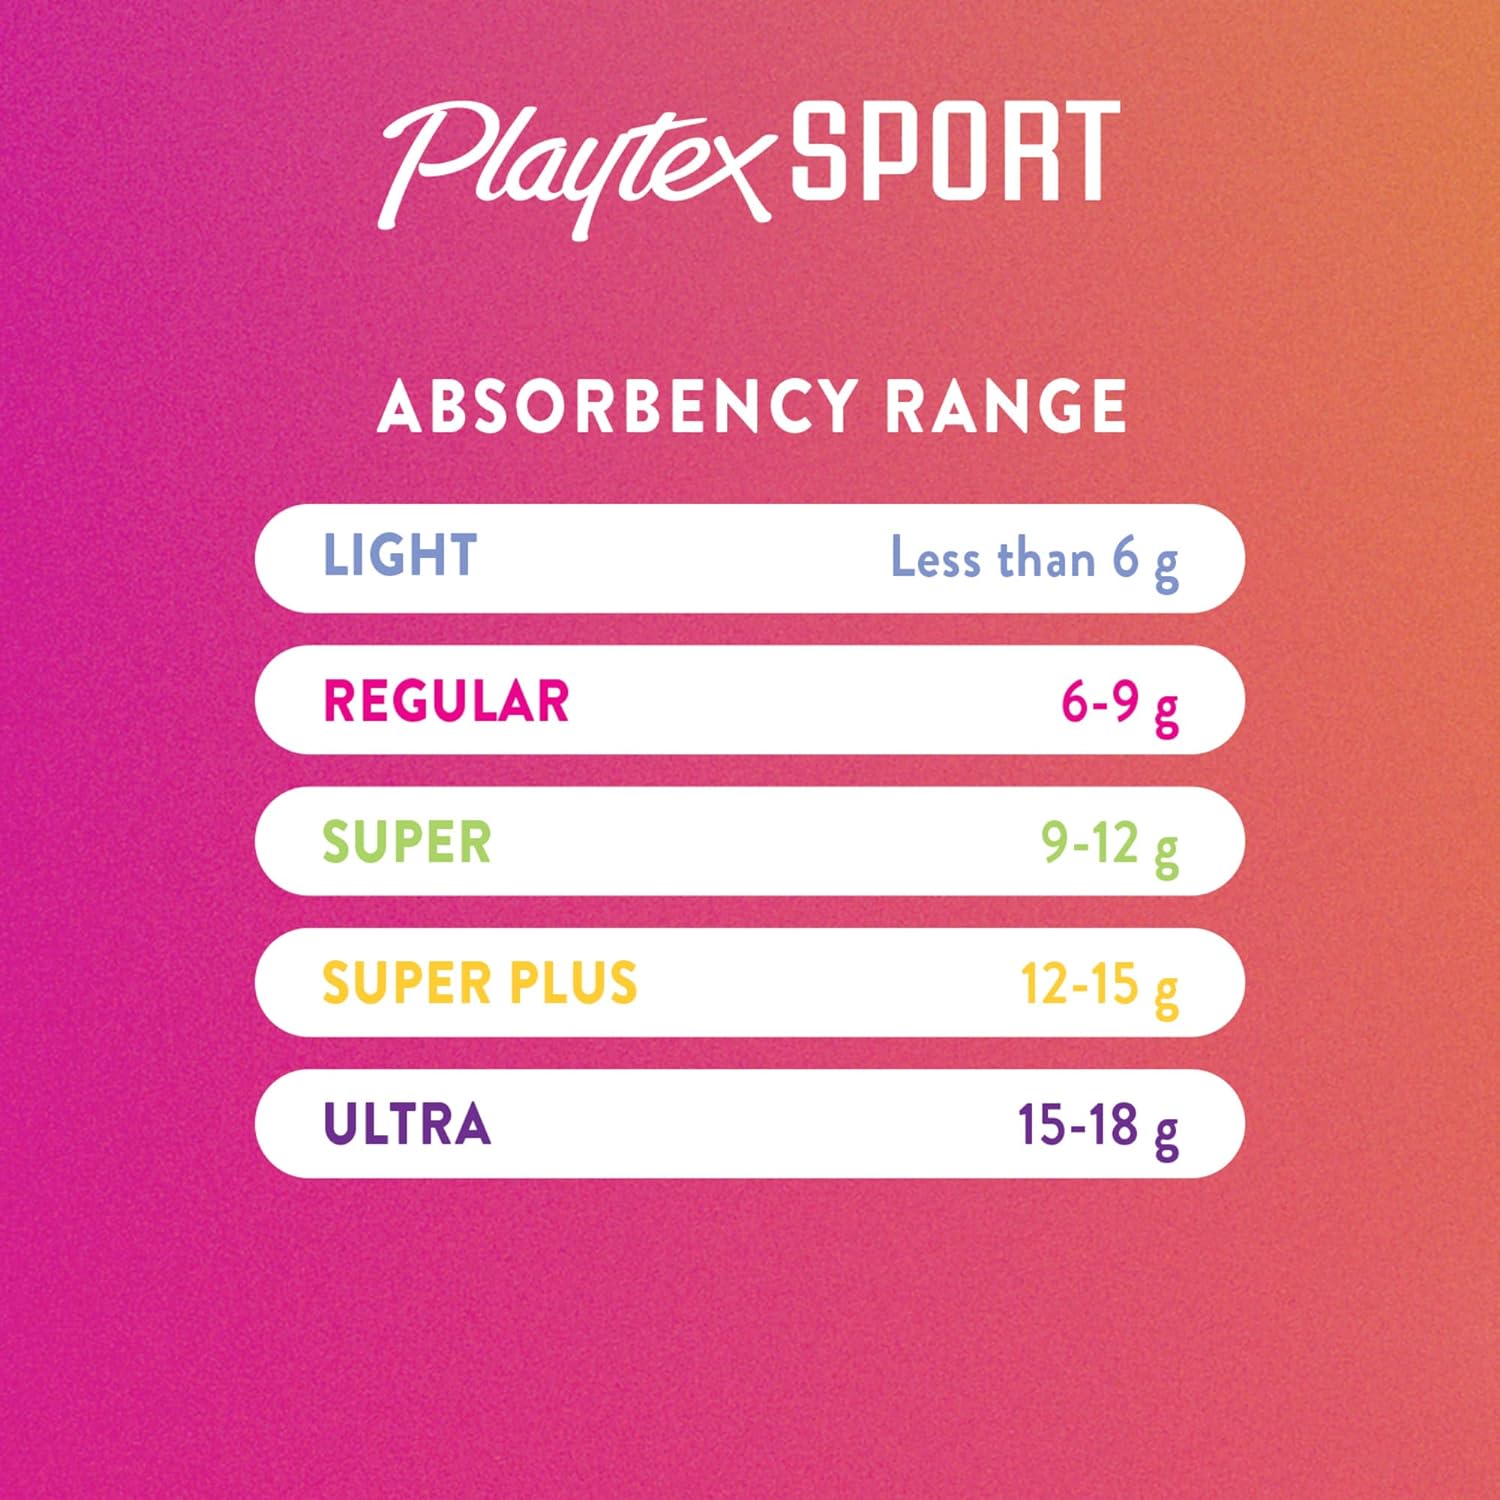 Playtex Sport Tampons, Multipack (18ct Regular/18ct Super/18ct Super+ Absorbency), Fragrance-Free - 54ct (3 Packs of 18ct) : Health & Household